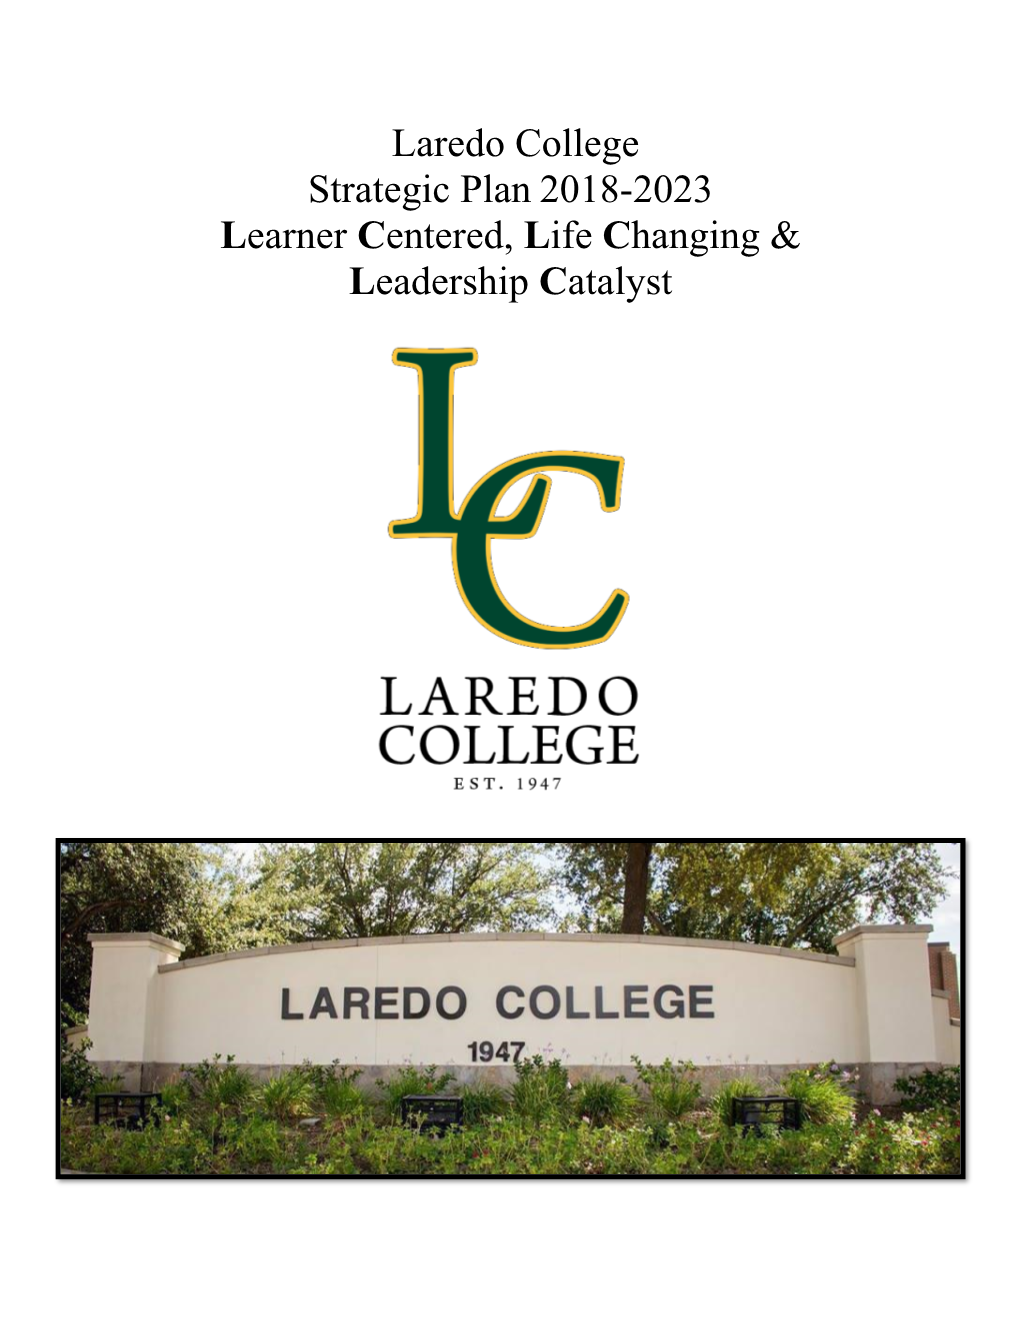 Laredo College Strategic Plan 2018-2023 Learner Centered, Life Changing & Leadership Catalyst